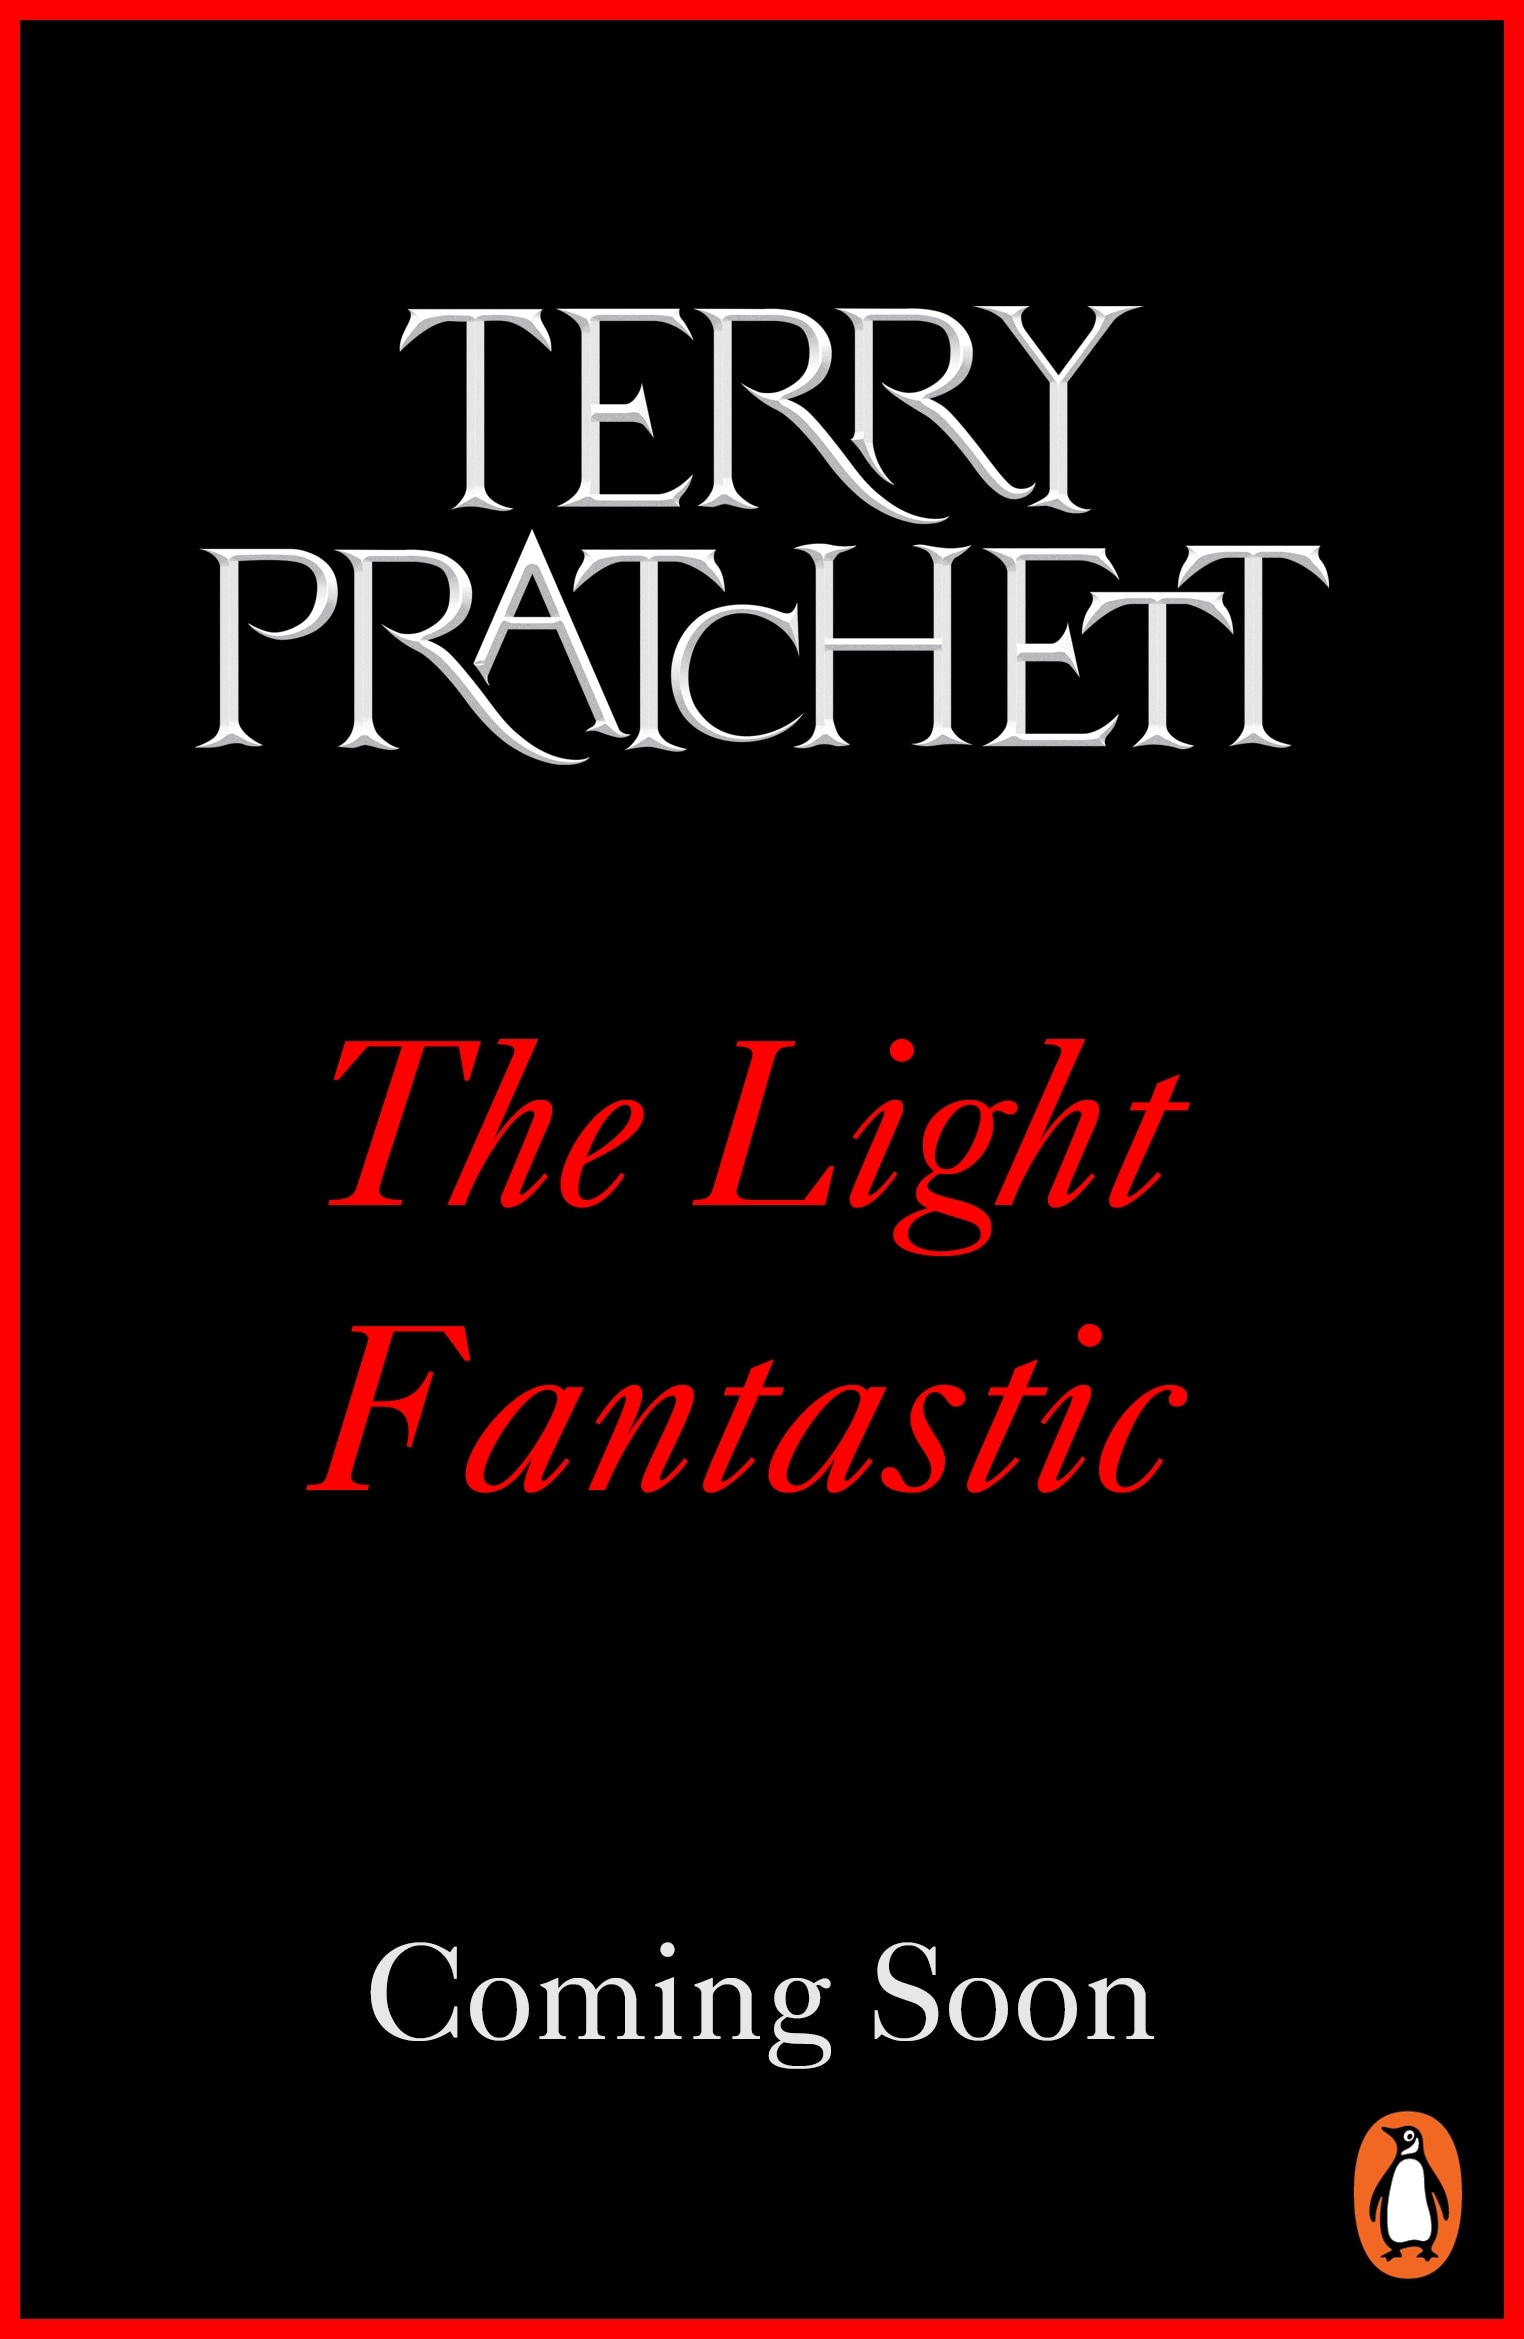 Book “The Light Fantastic” by Terry Pratchett — July 28, 2022